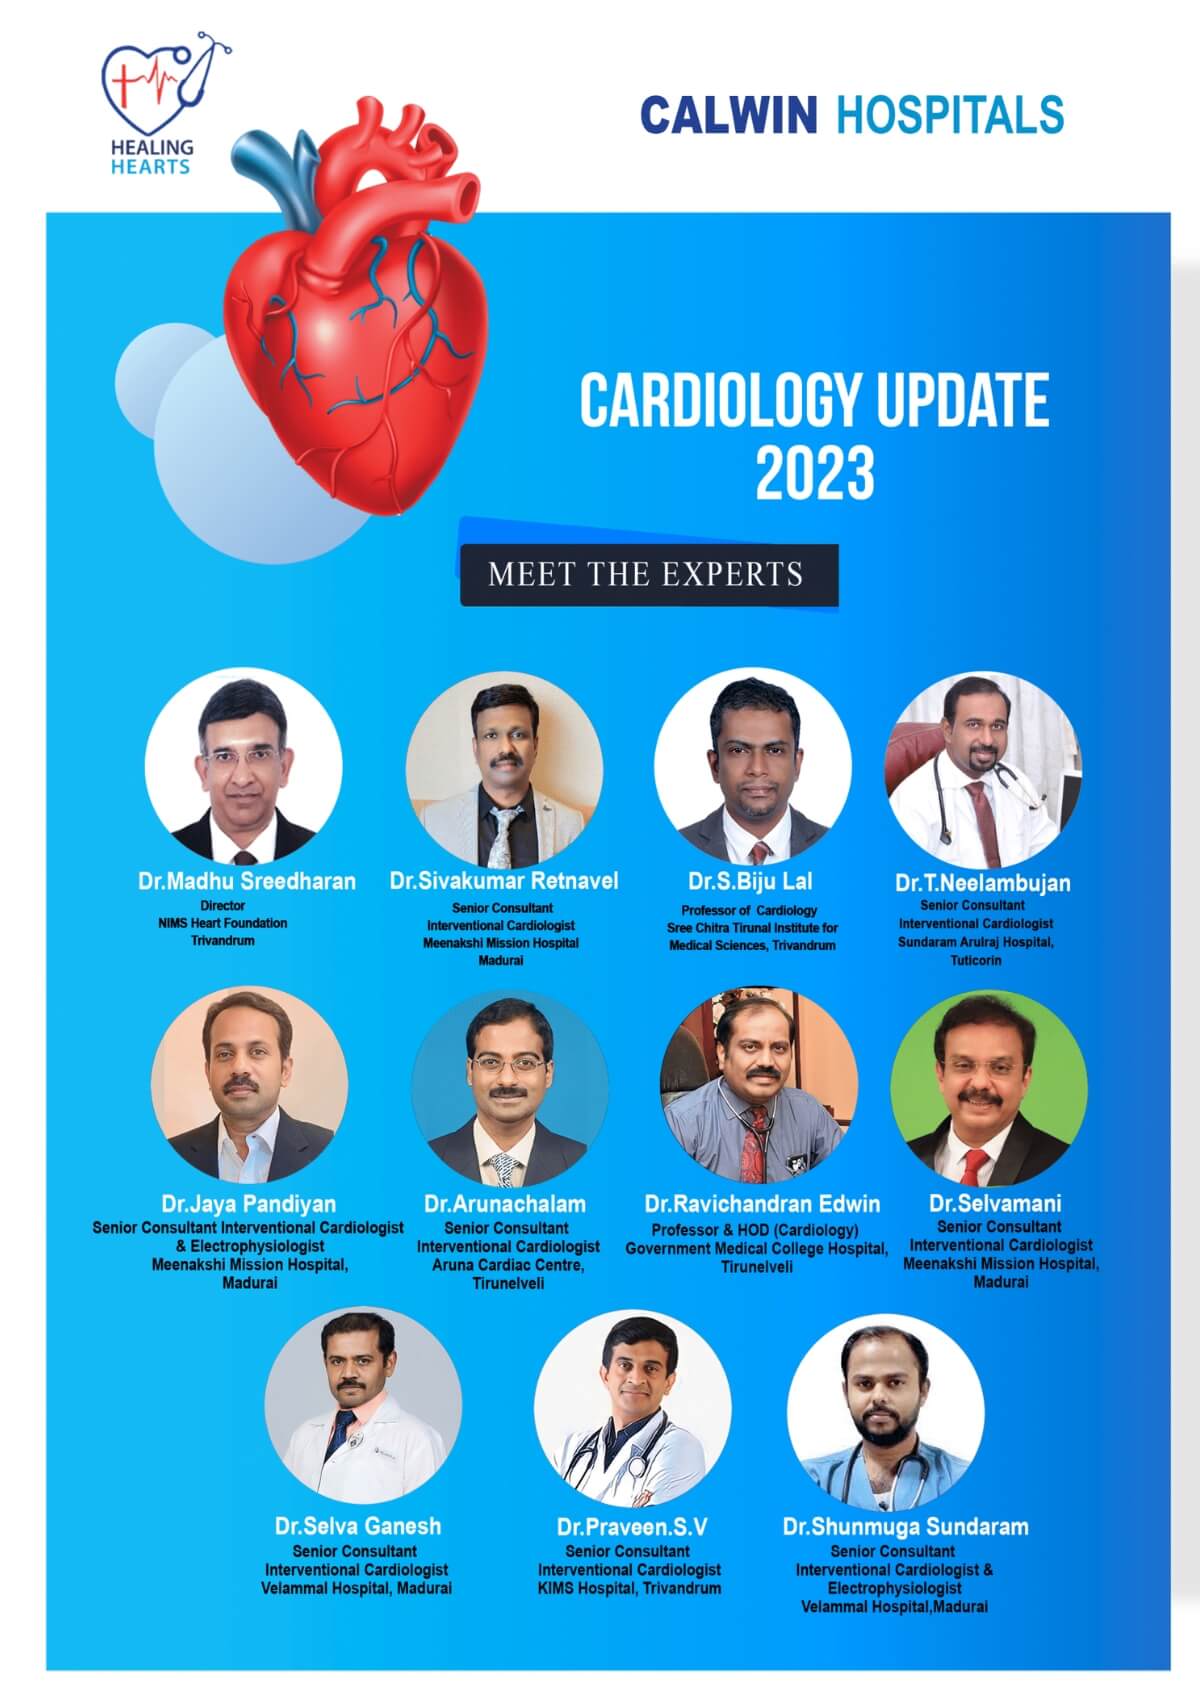 Calwin Hopitals Cardiology Update 2023 Experts Team